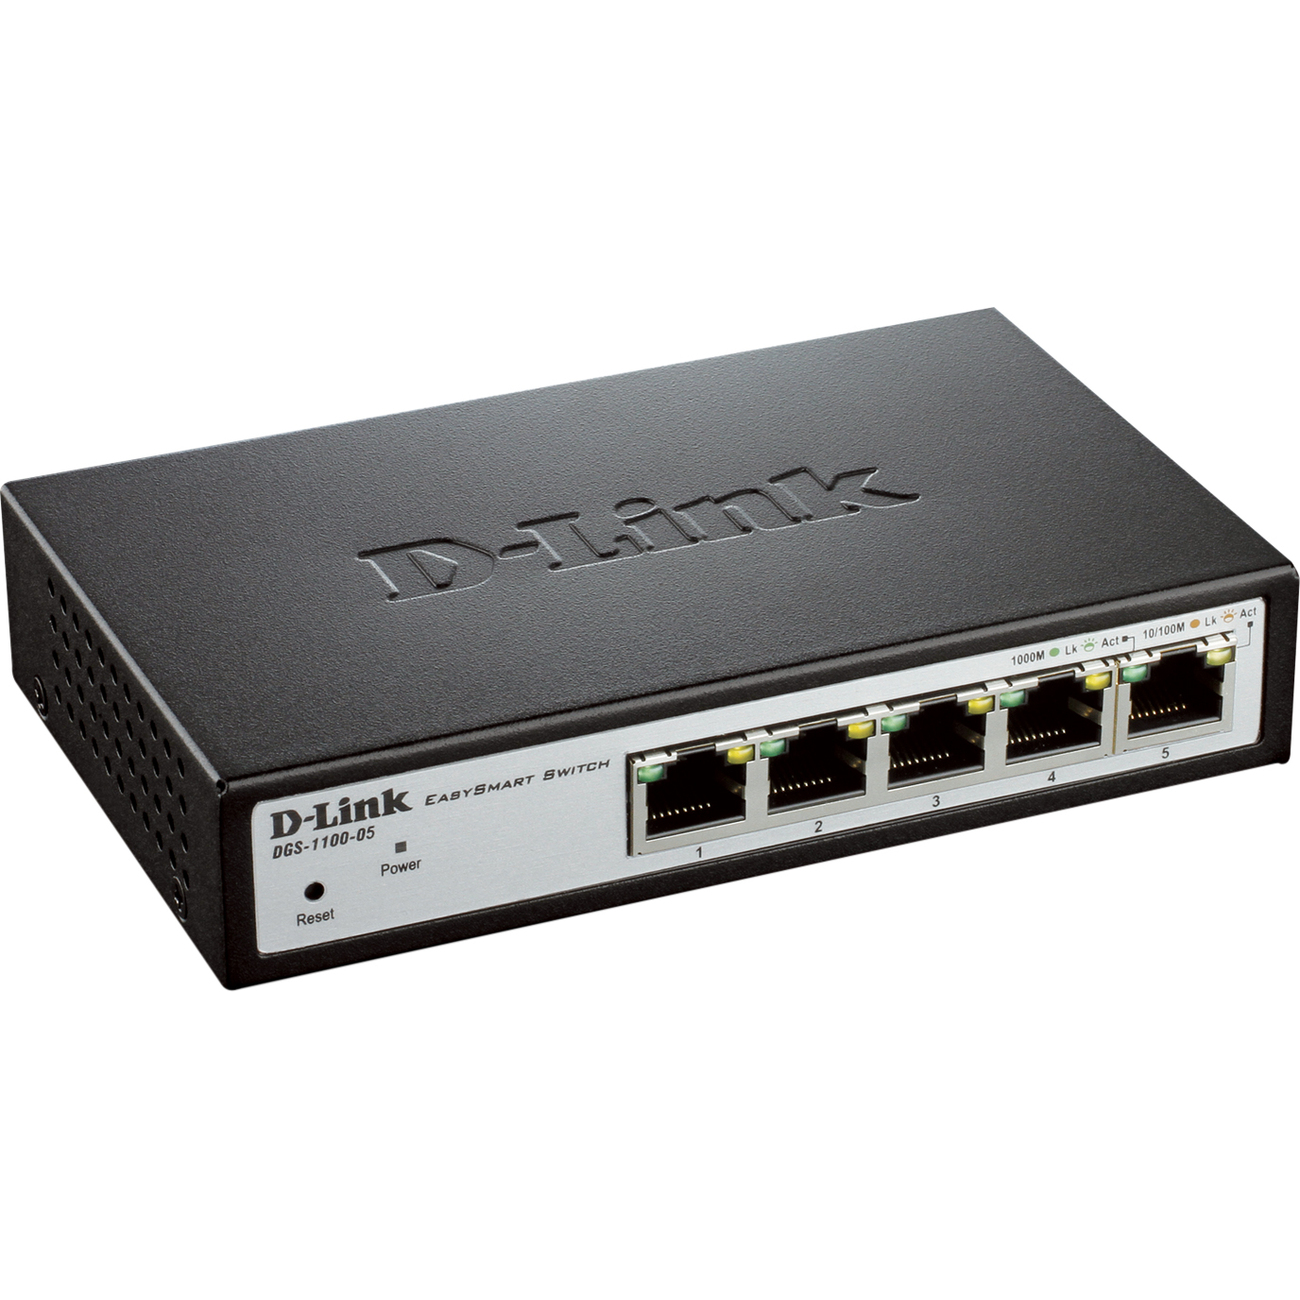 D-LINK Easy Smart 5-Port Gigabit Switch